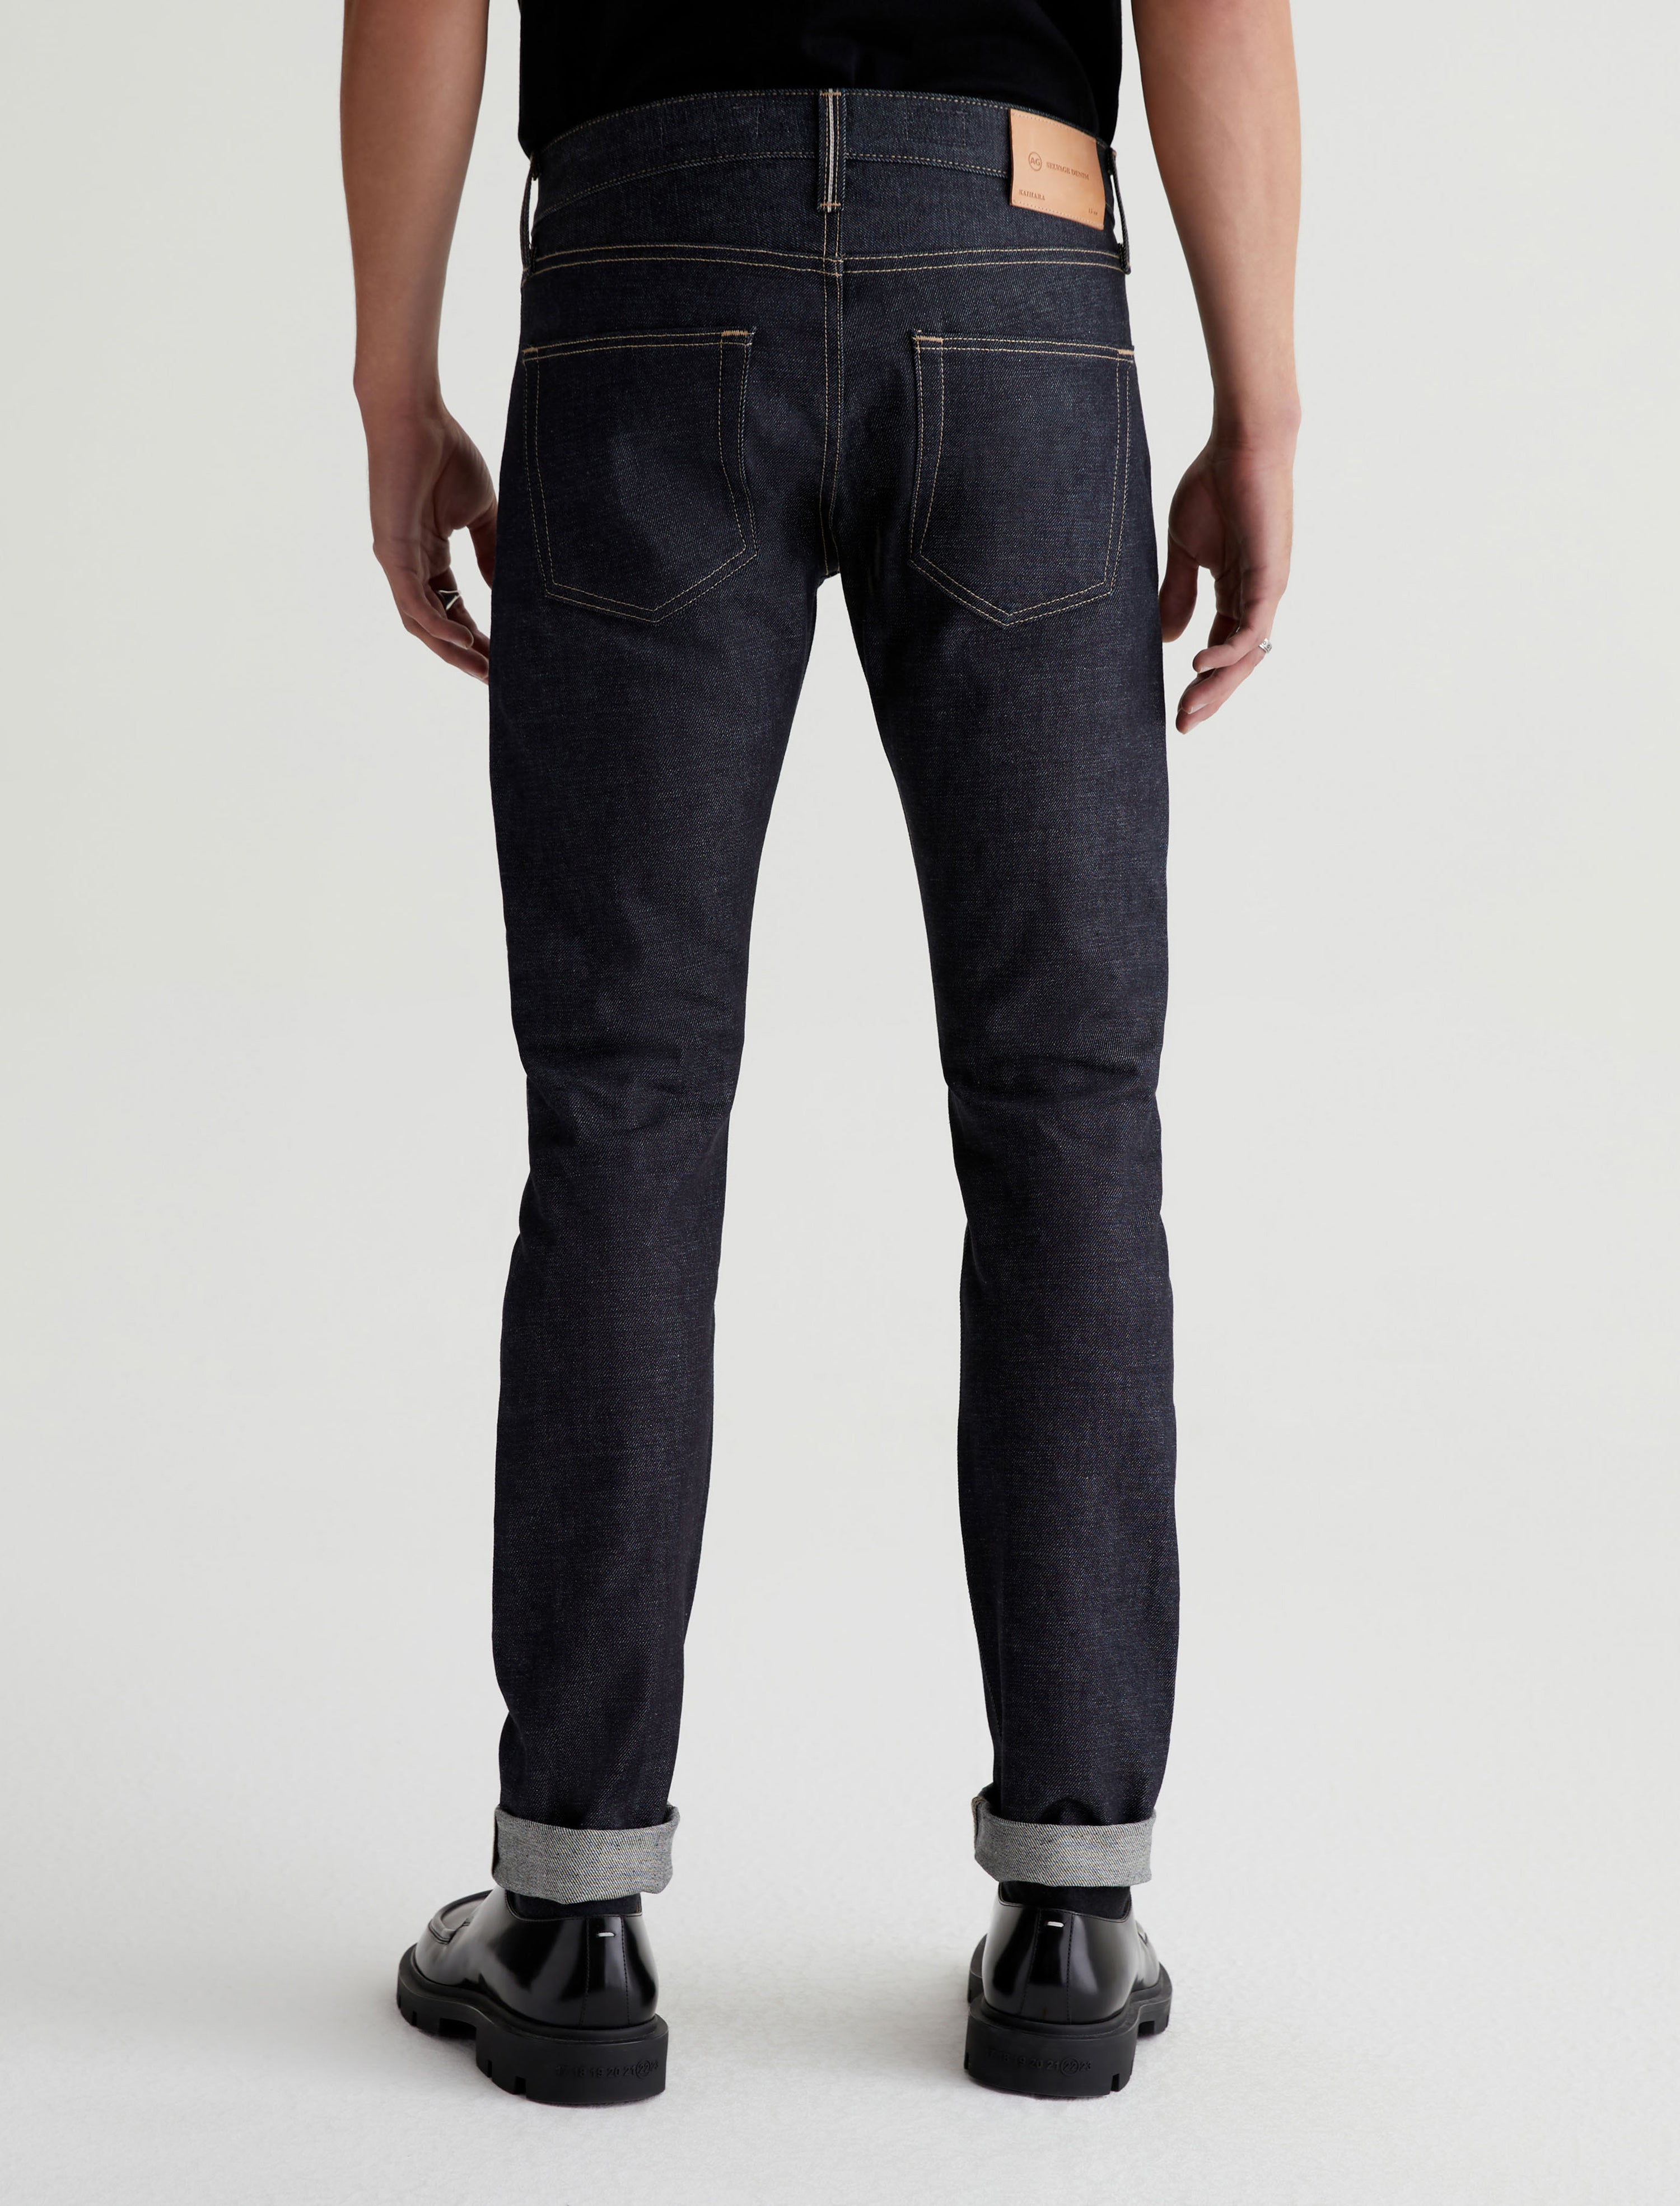 Pin by Austin Cornish on Denim | Mens fashion denim, Raw denim jeans, Denim  jeans fashion